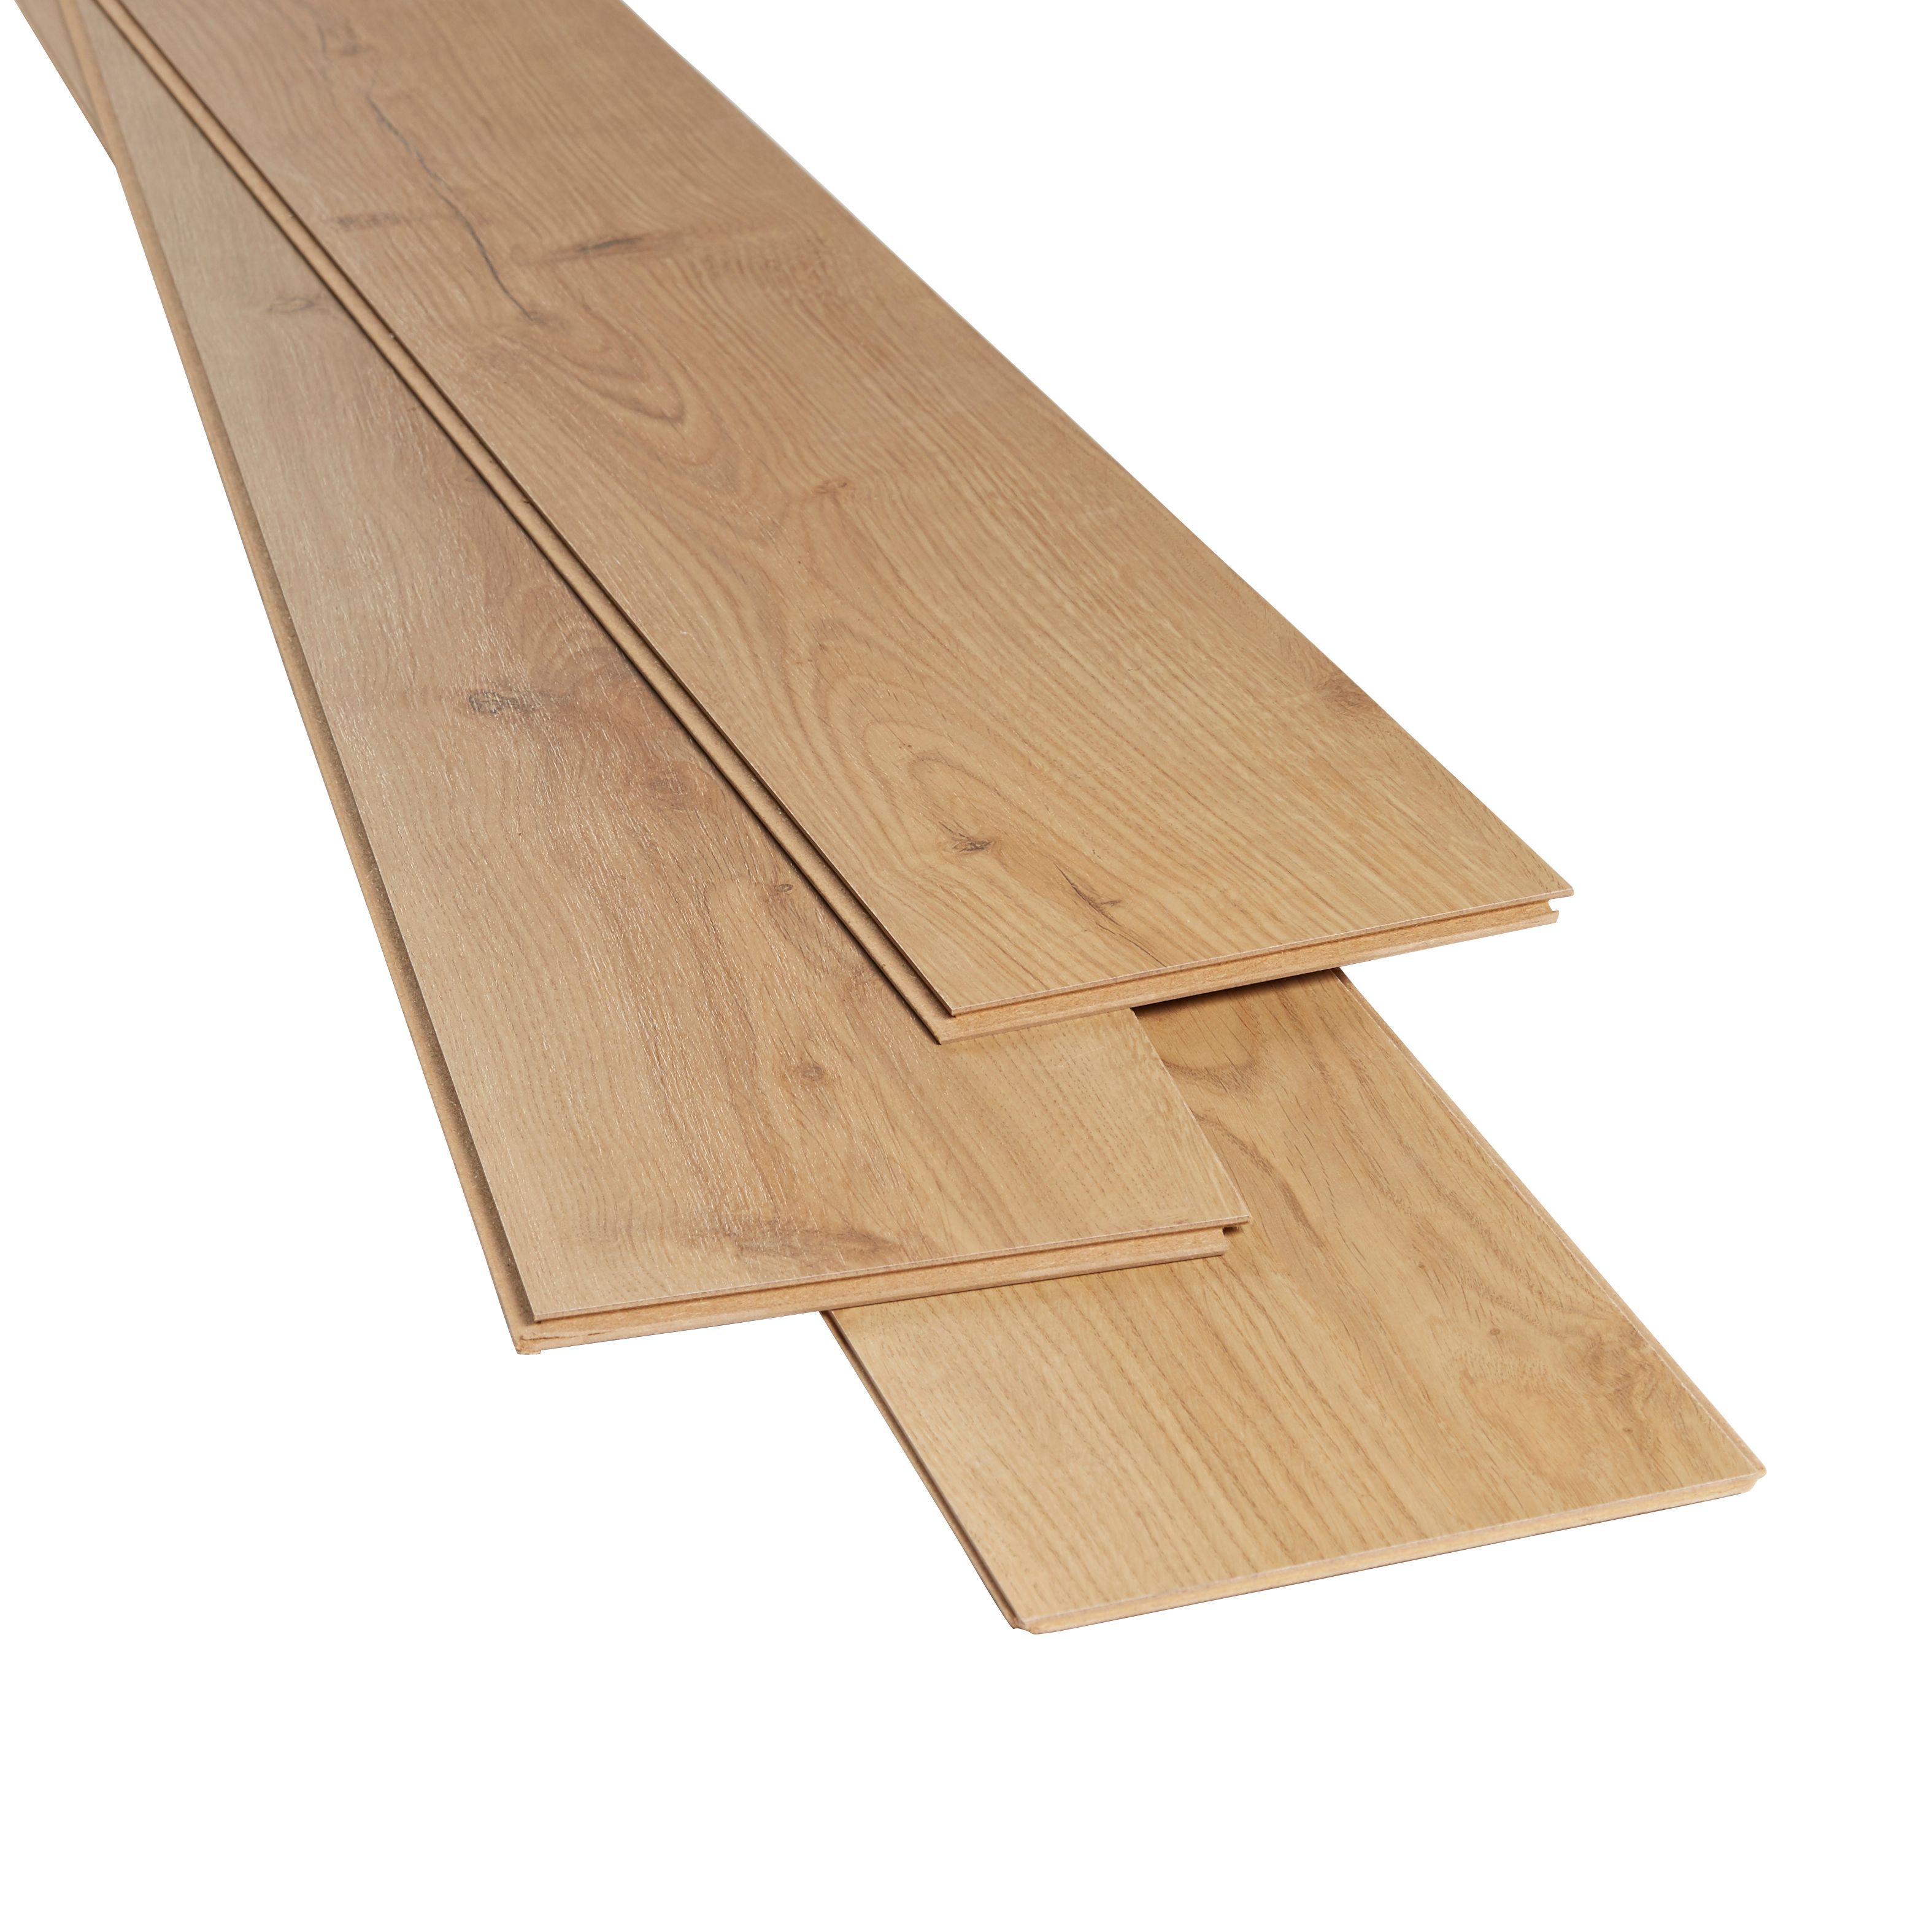 GoodHome Mackay Natural Oak effect Flooring, 2.467m² Pack